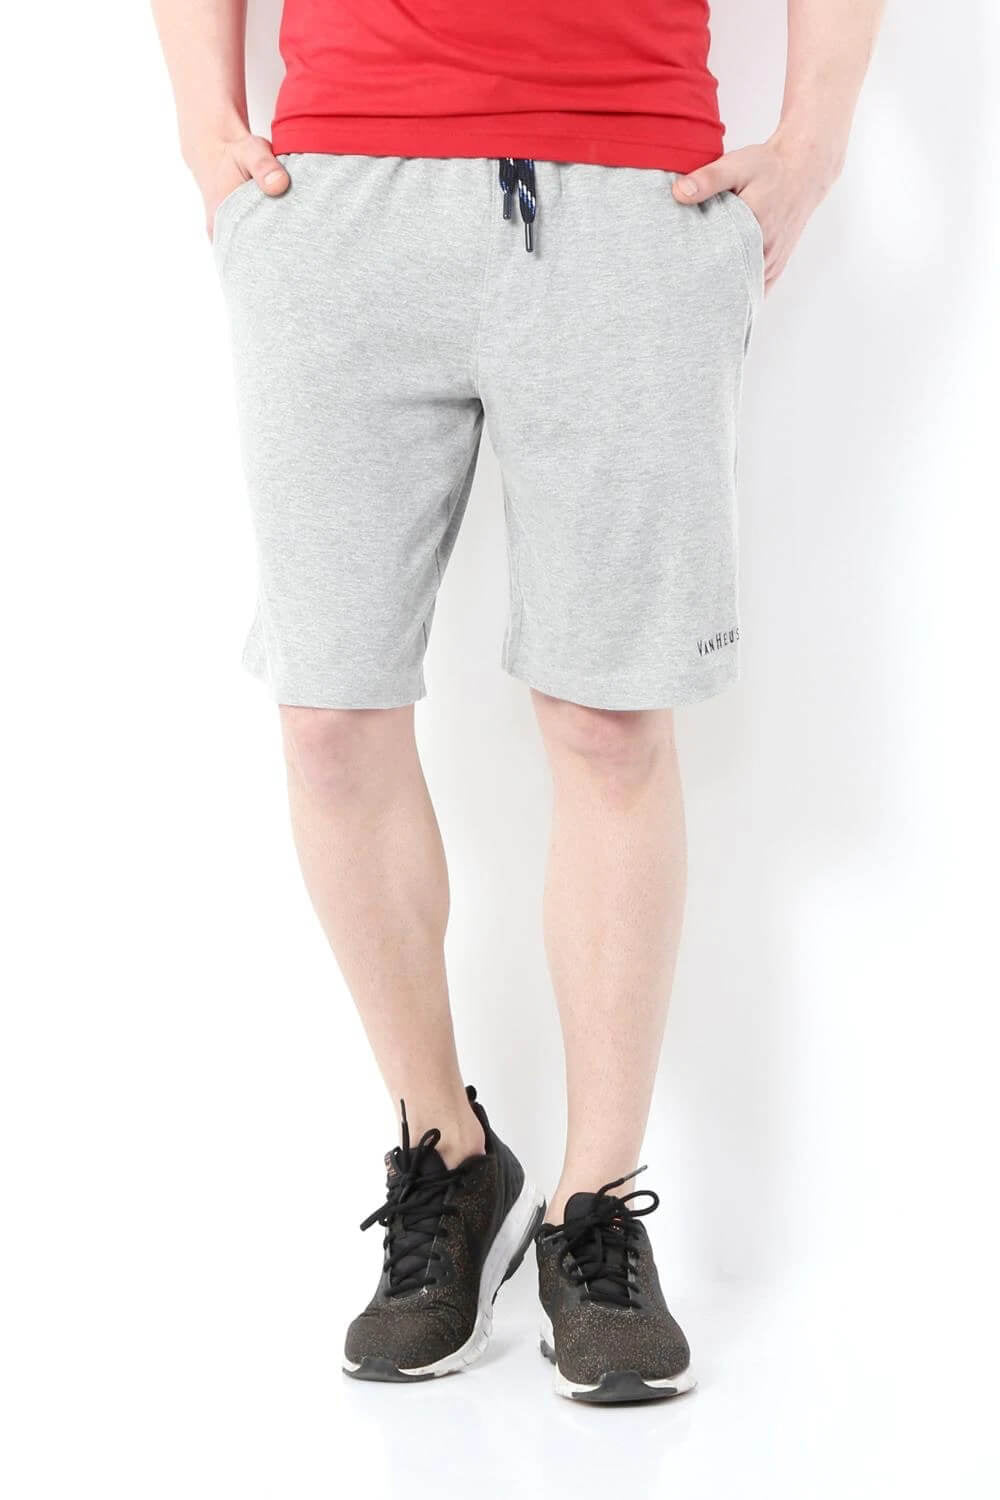 Van Heusen Grey Knit Shorts for Men #50001